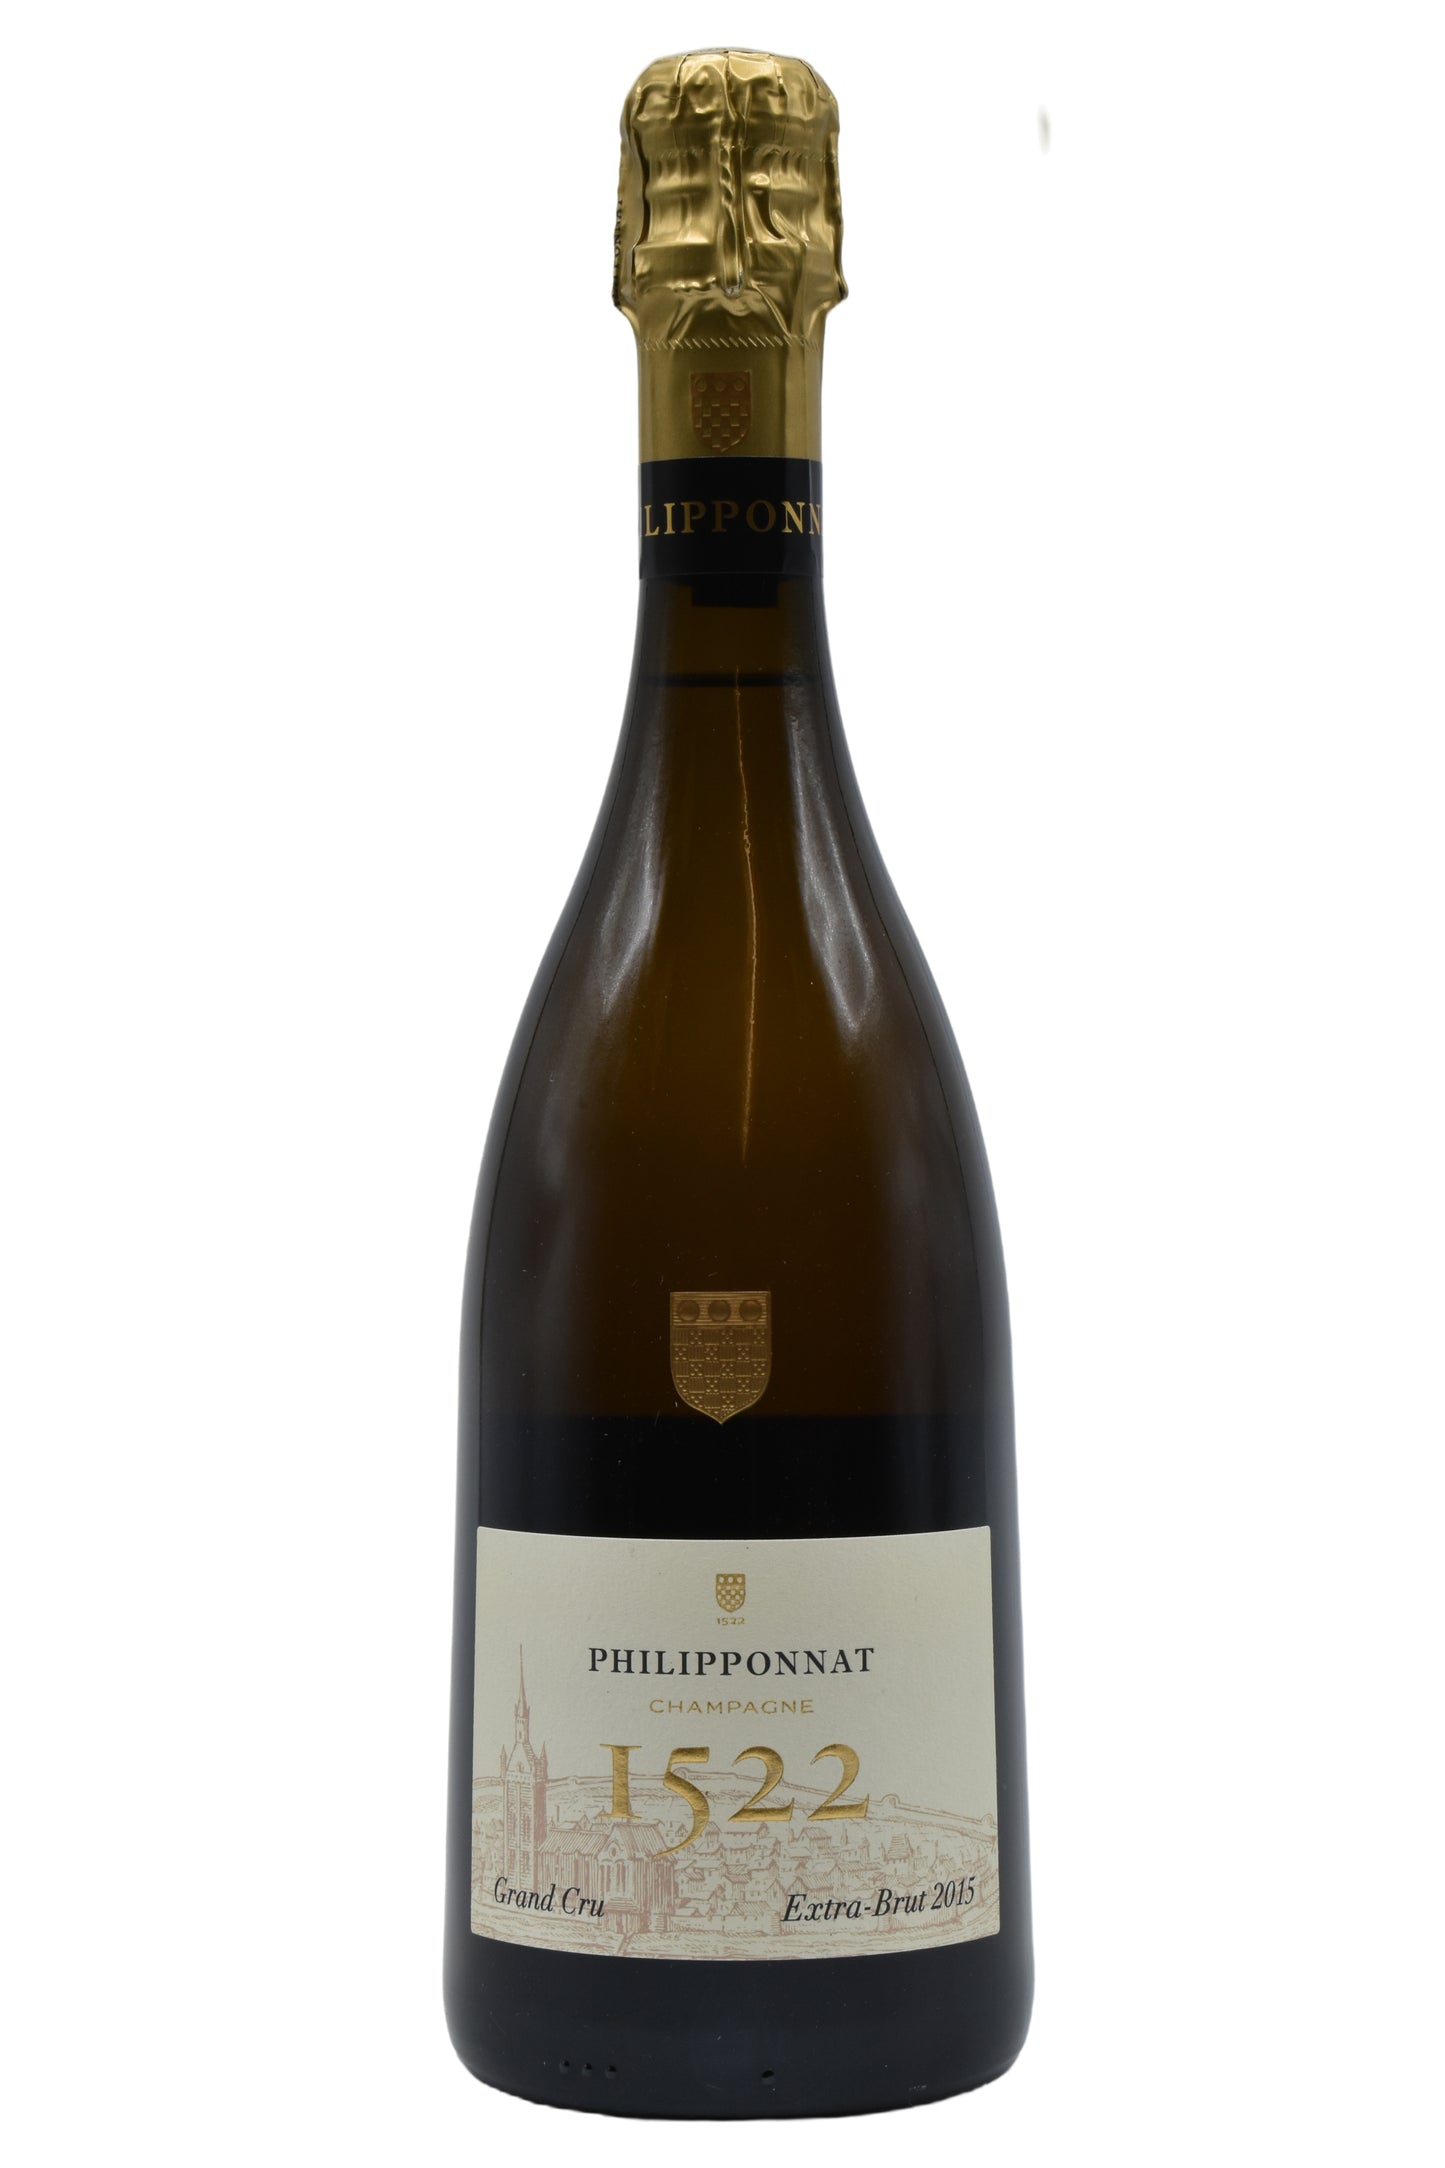 2015 Philipponnat, Champagne Cuvee 1522 750ml - Walker Wine Co.